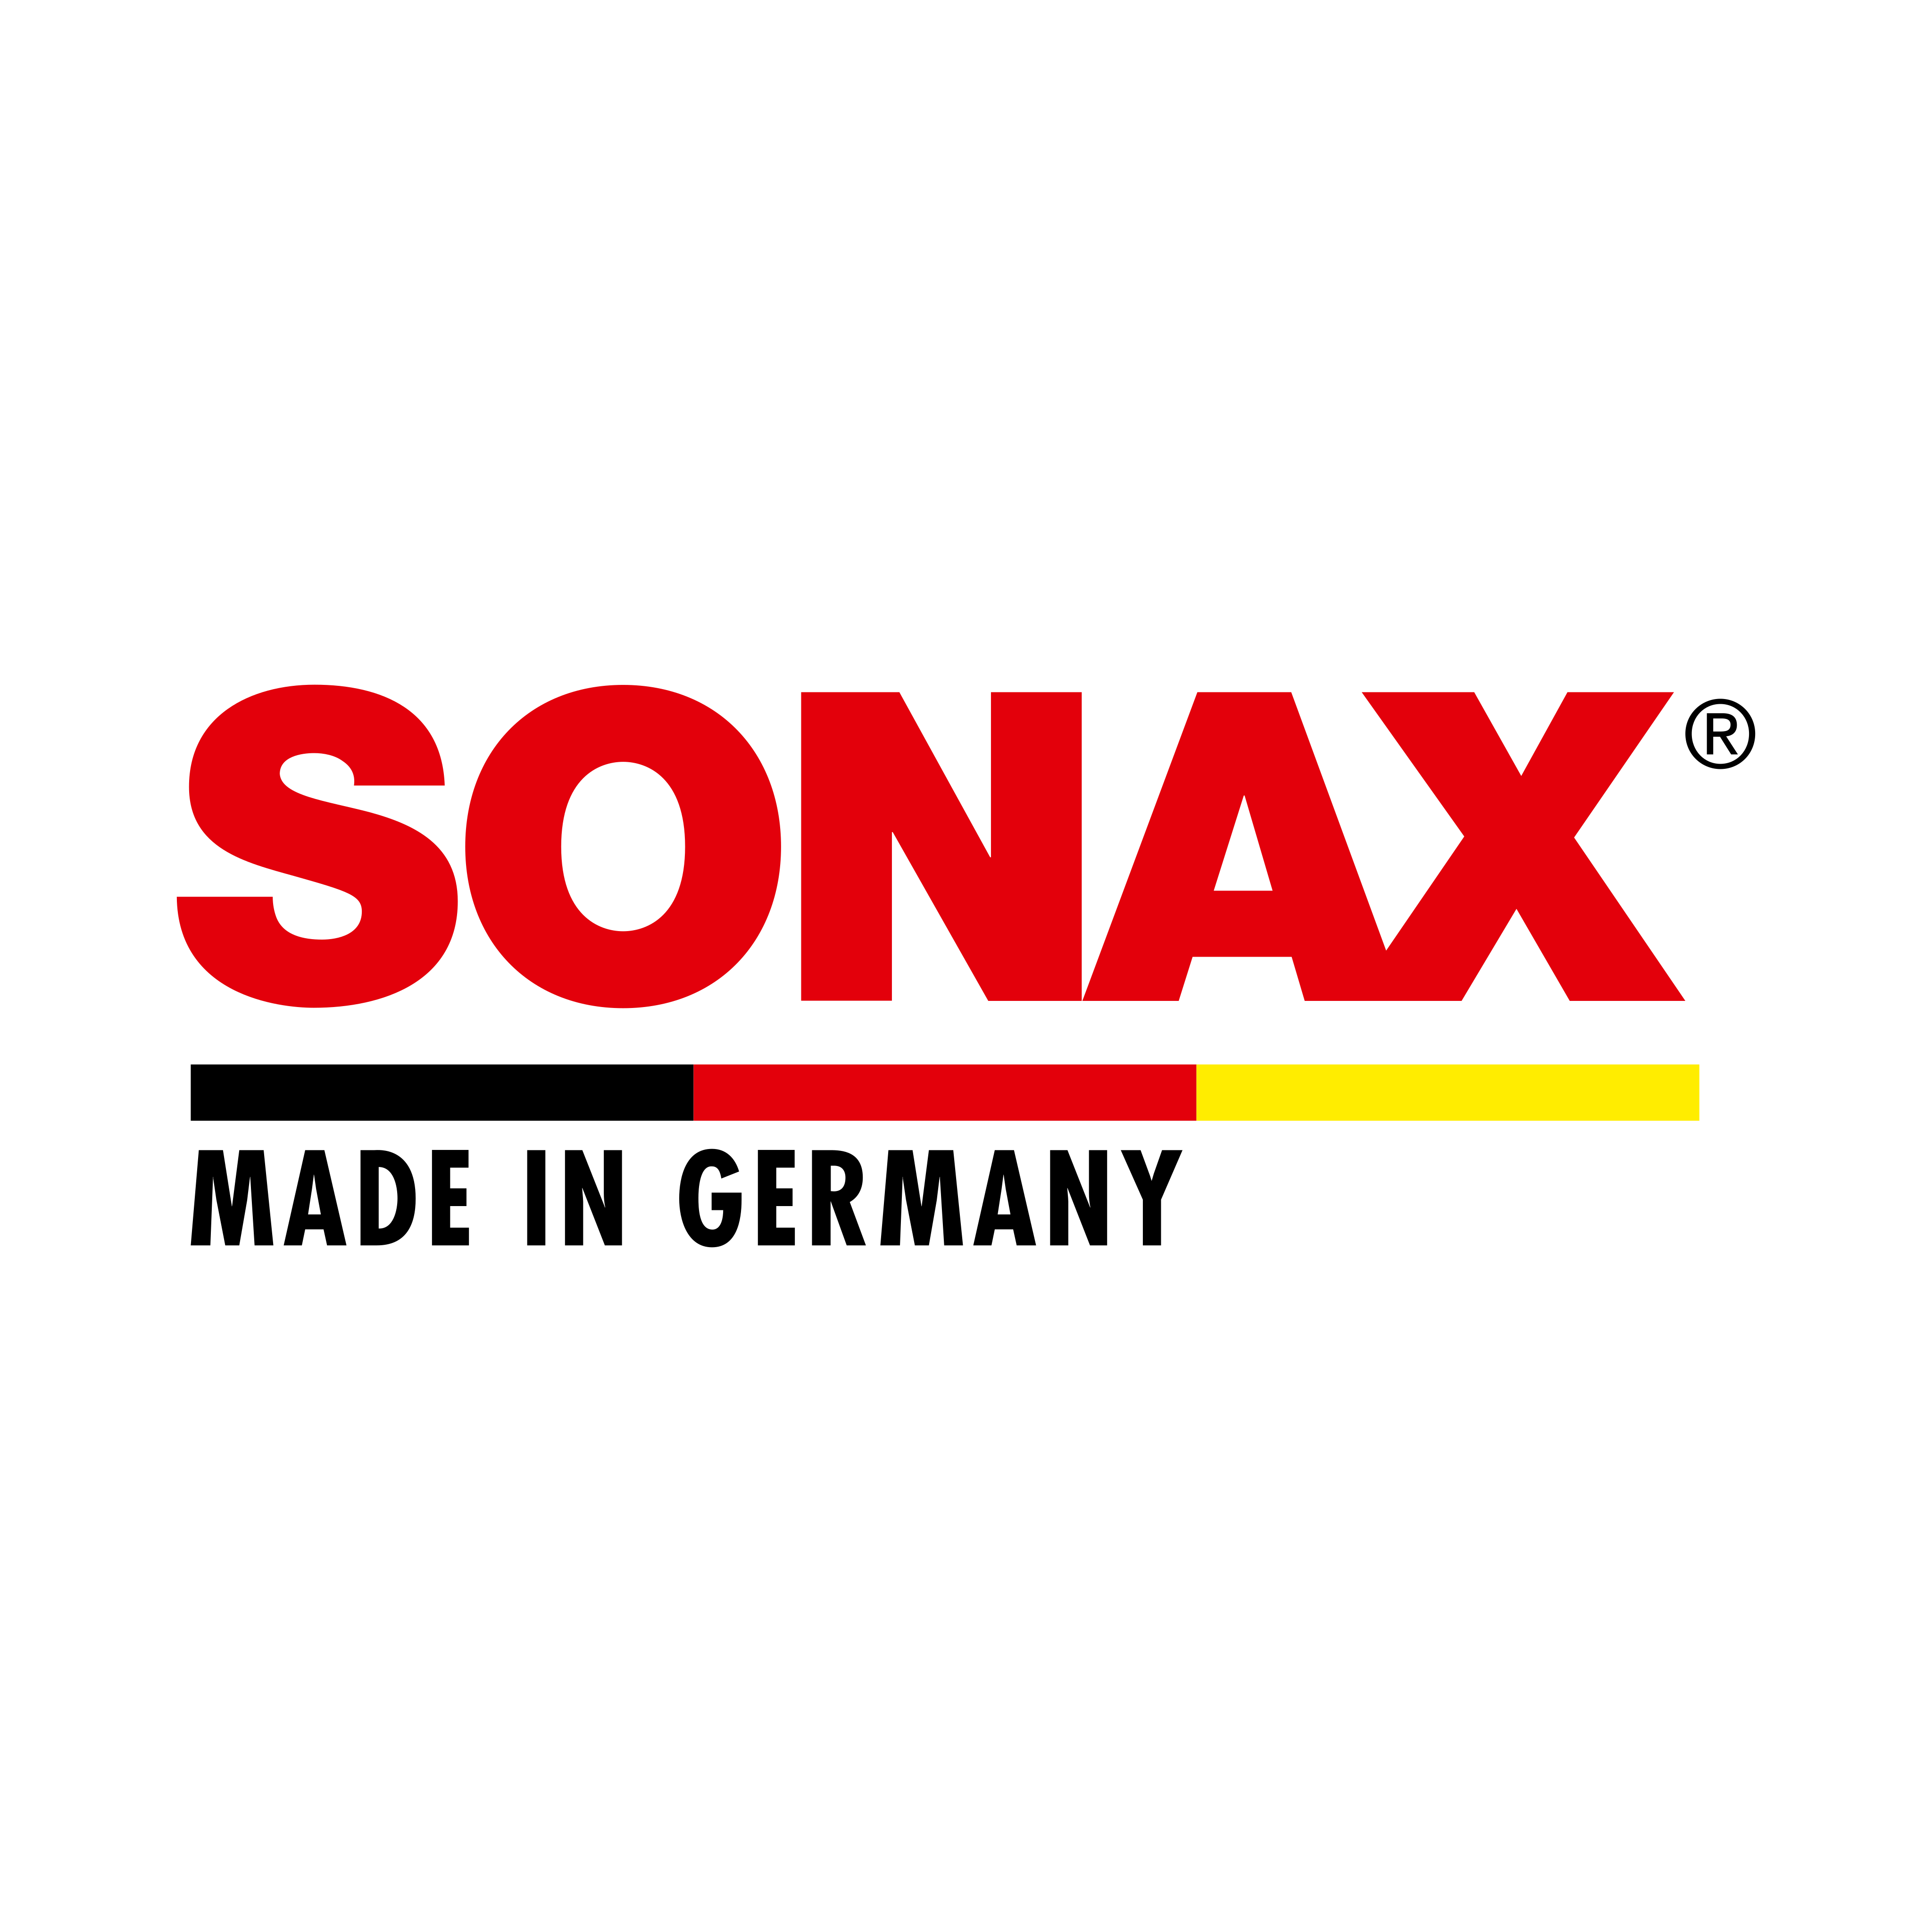 Sonax Logo PNG.